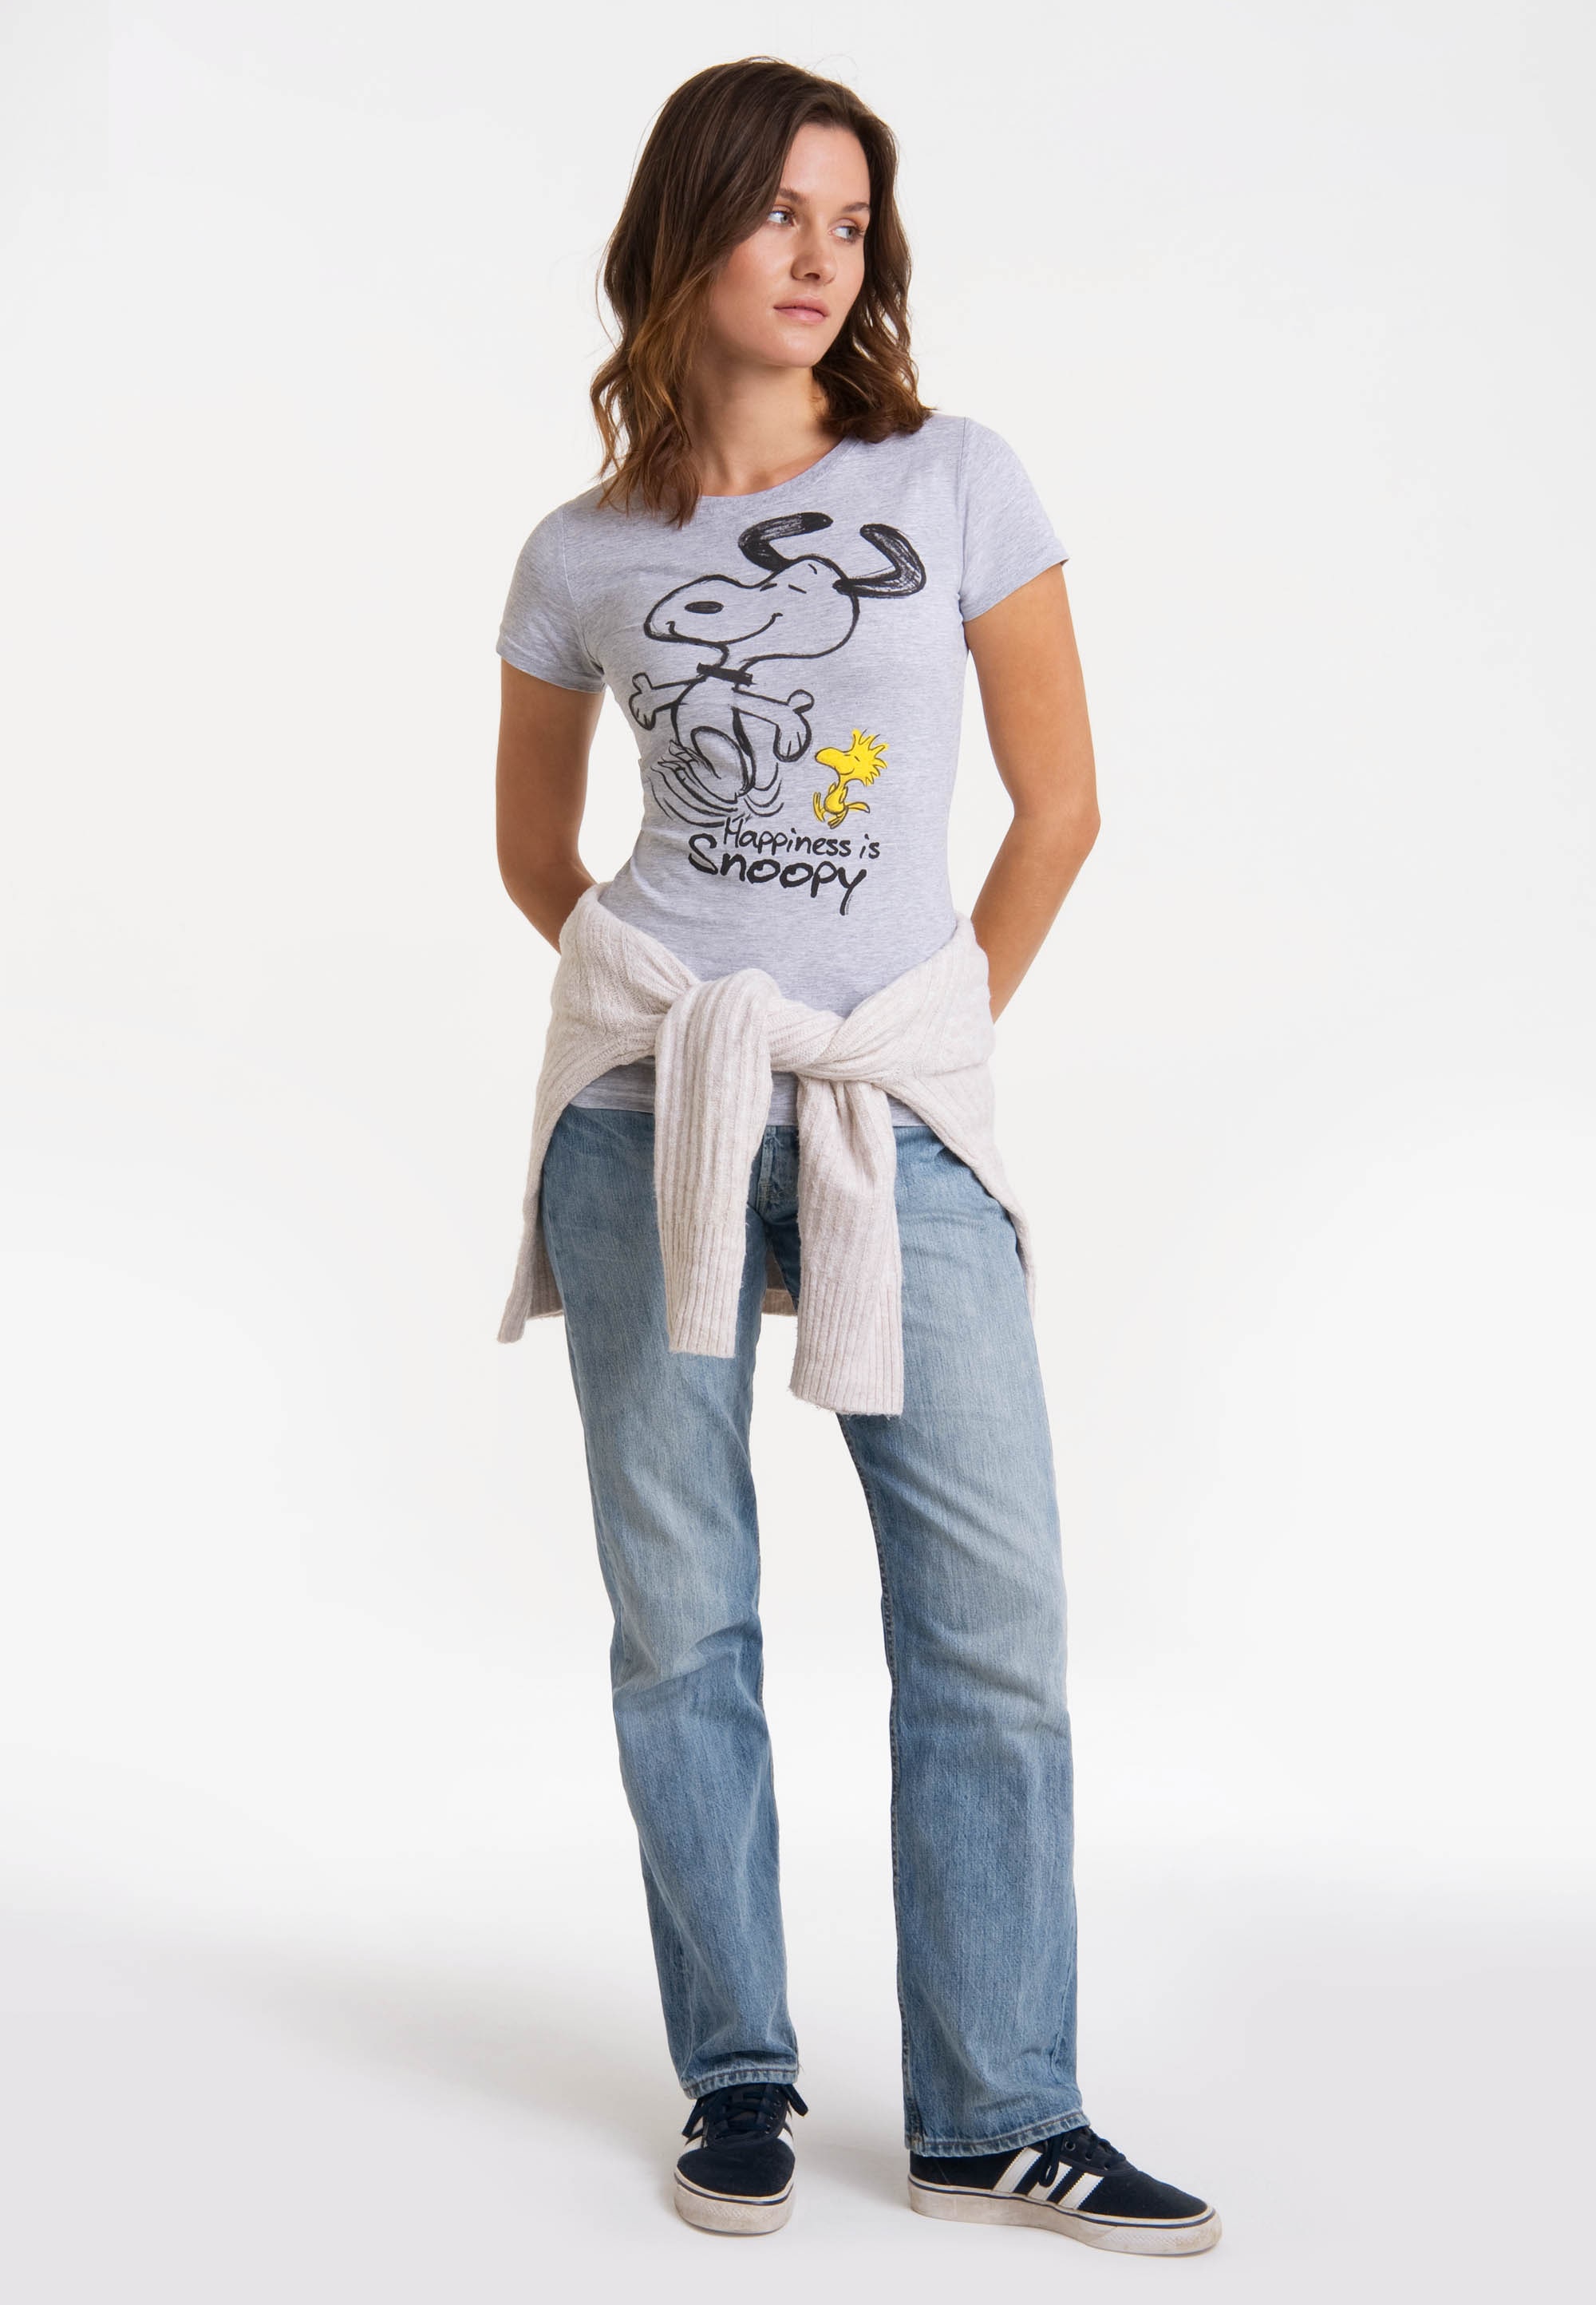 LOGOSHIRT T-Shirt »Snoopy & Woodstock Happiness«, Print